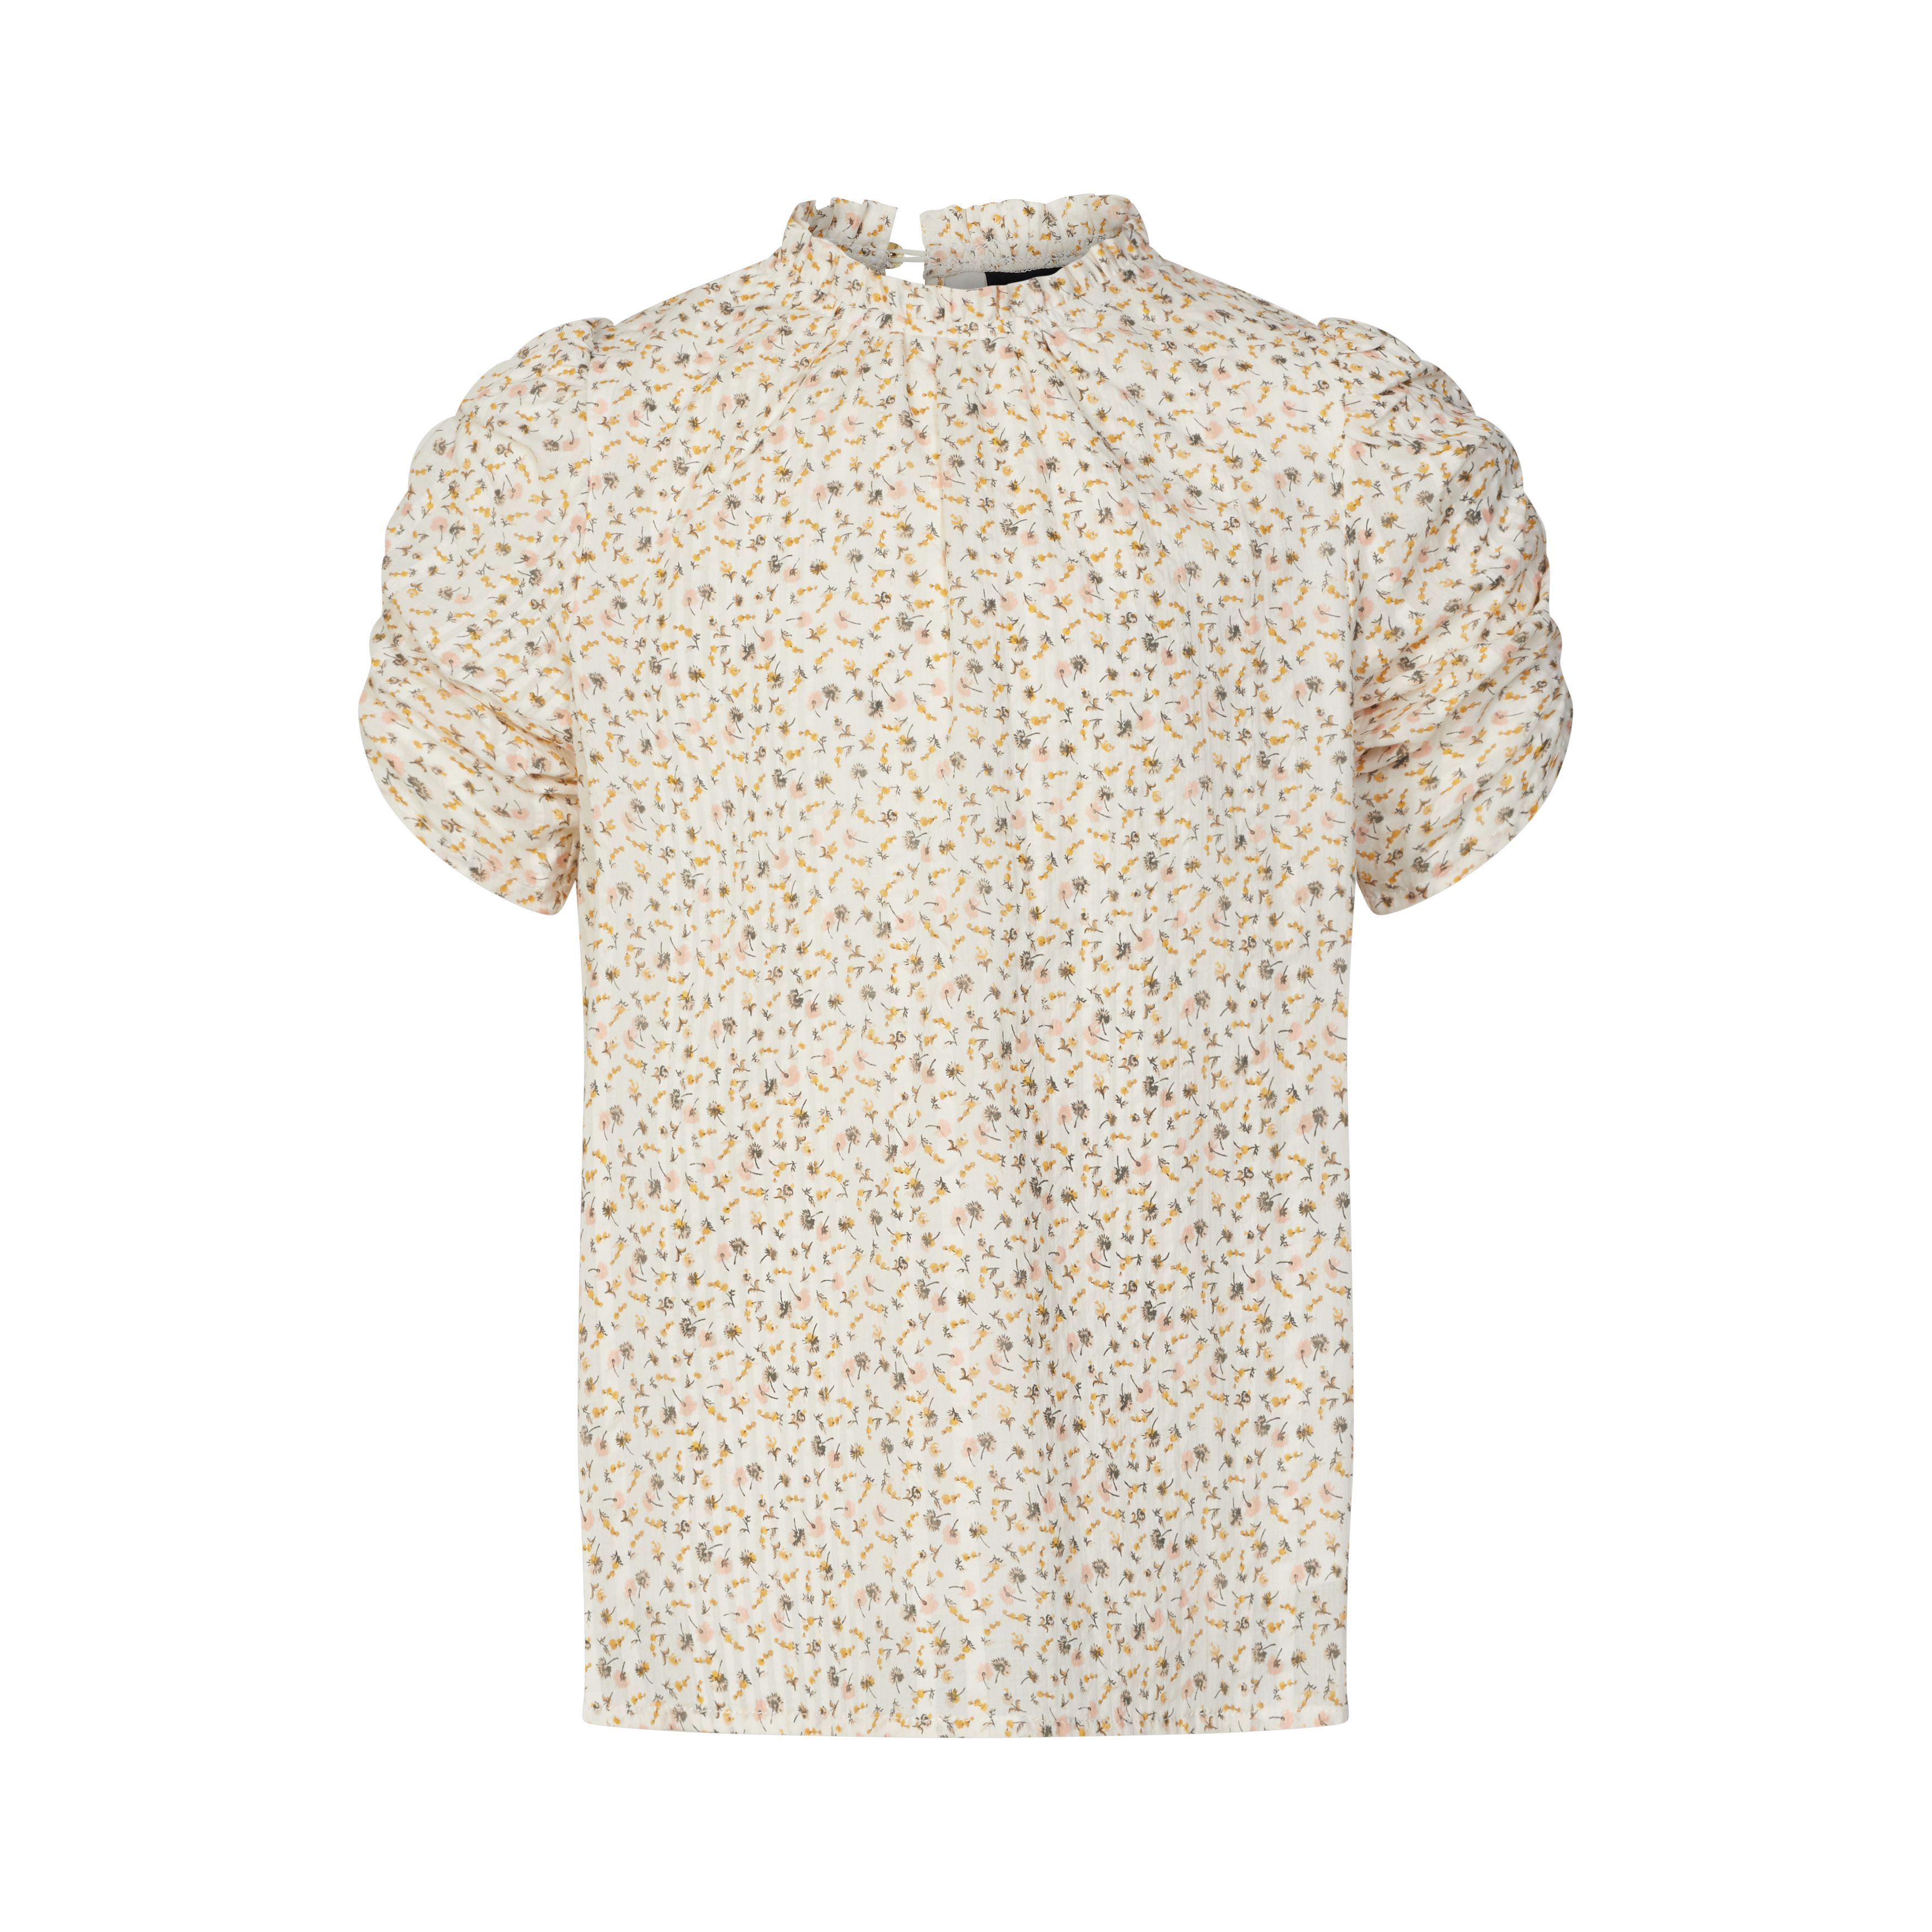 Petit by Sofie Schnoor P212235 t-shirt, flower white, 116